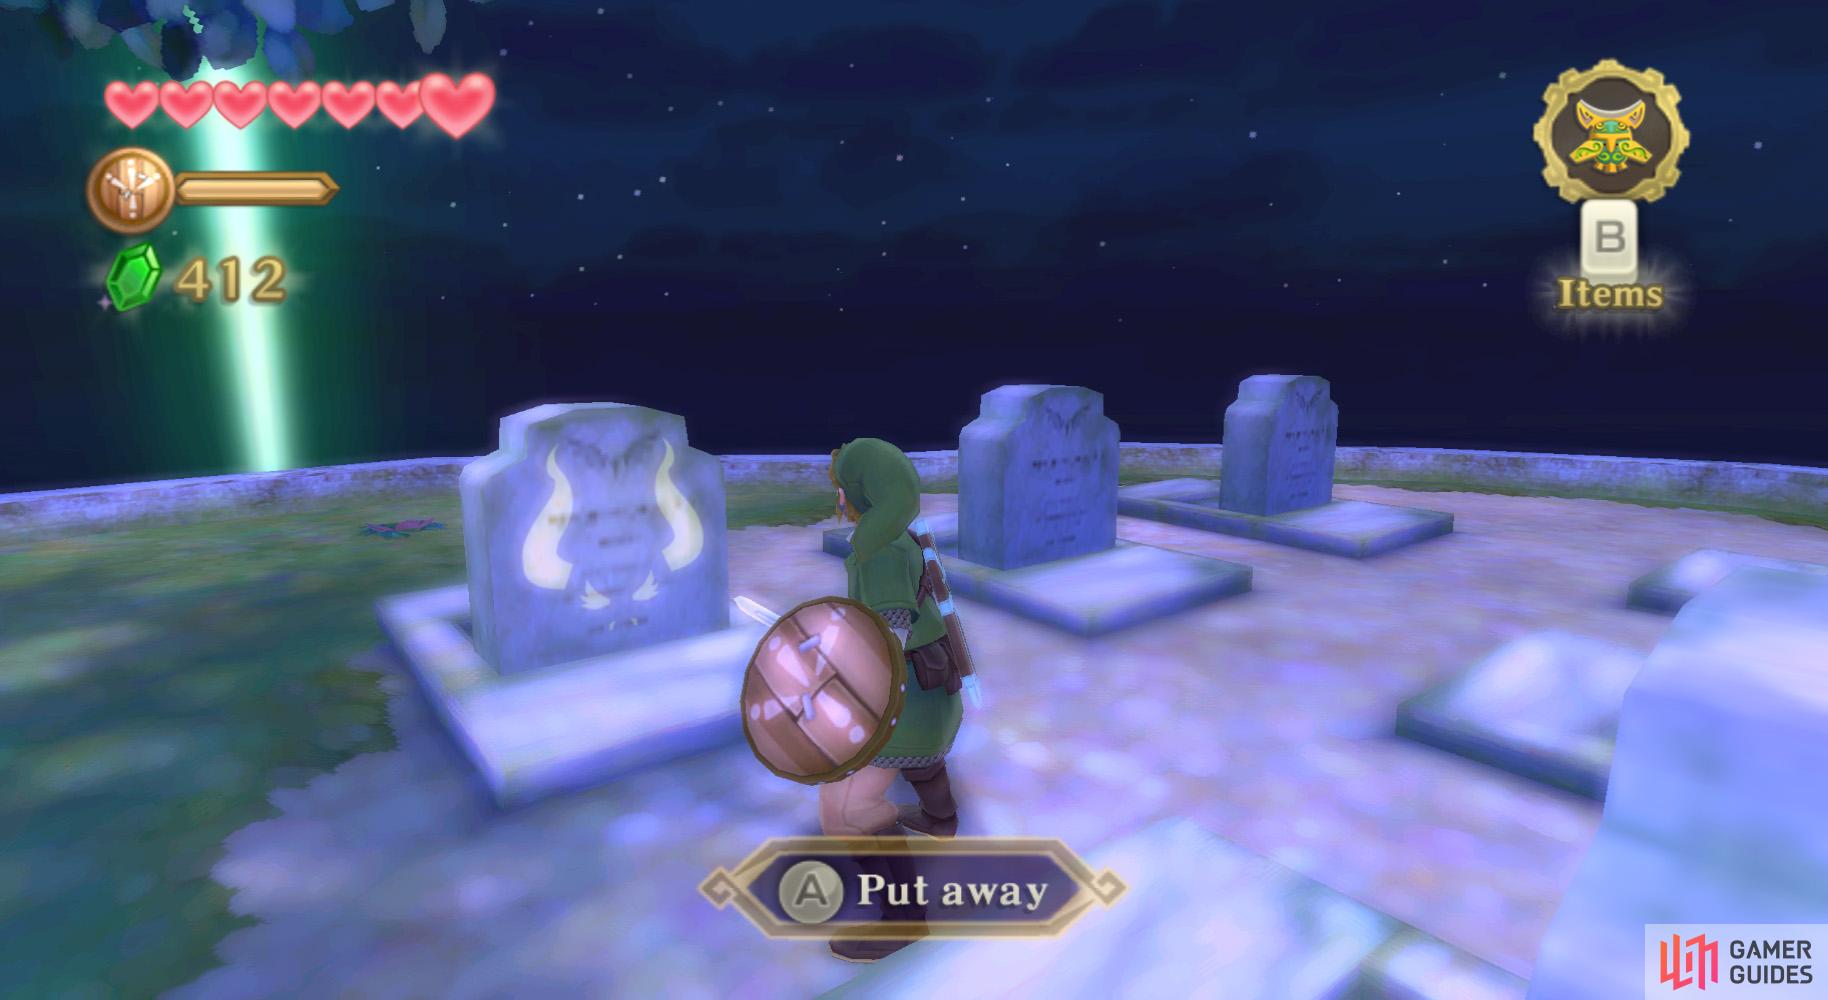 Poke this gravestone, then push it forward.